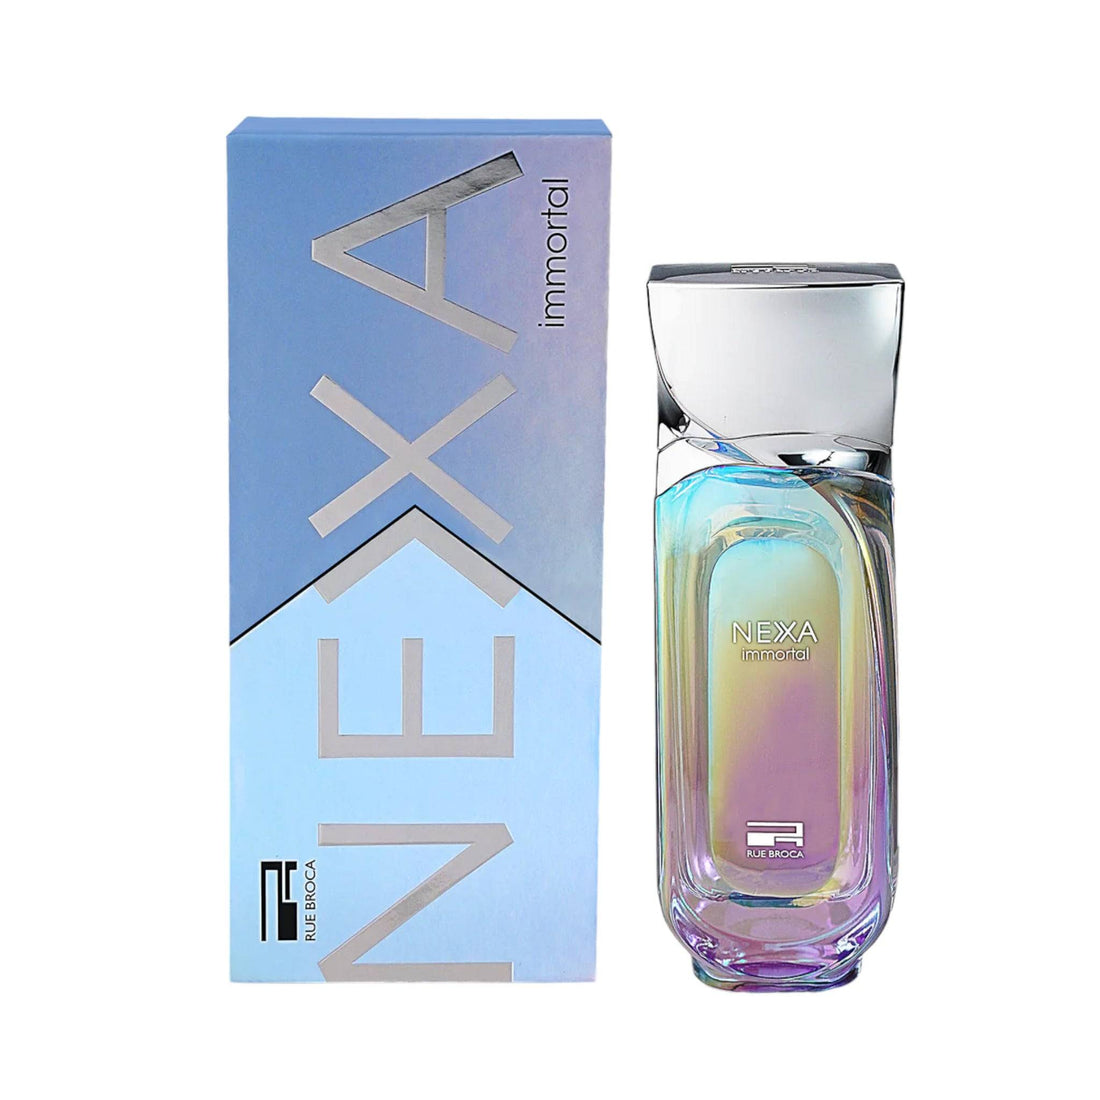 Elegant 100ml bottle of Rue Broca Nexa Immortal Eau de Parfum, symbolizing its botanical and floral fragrance journey.